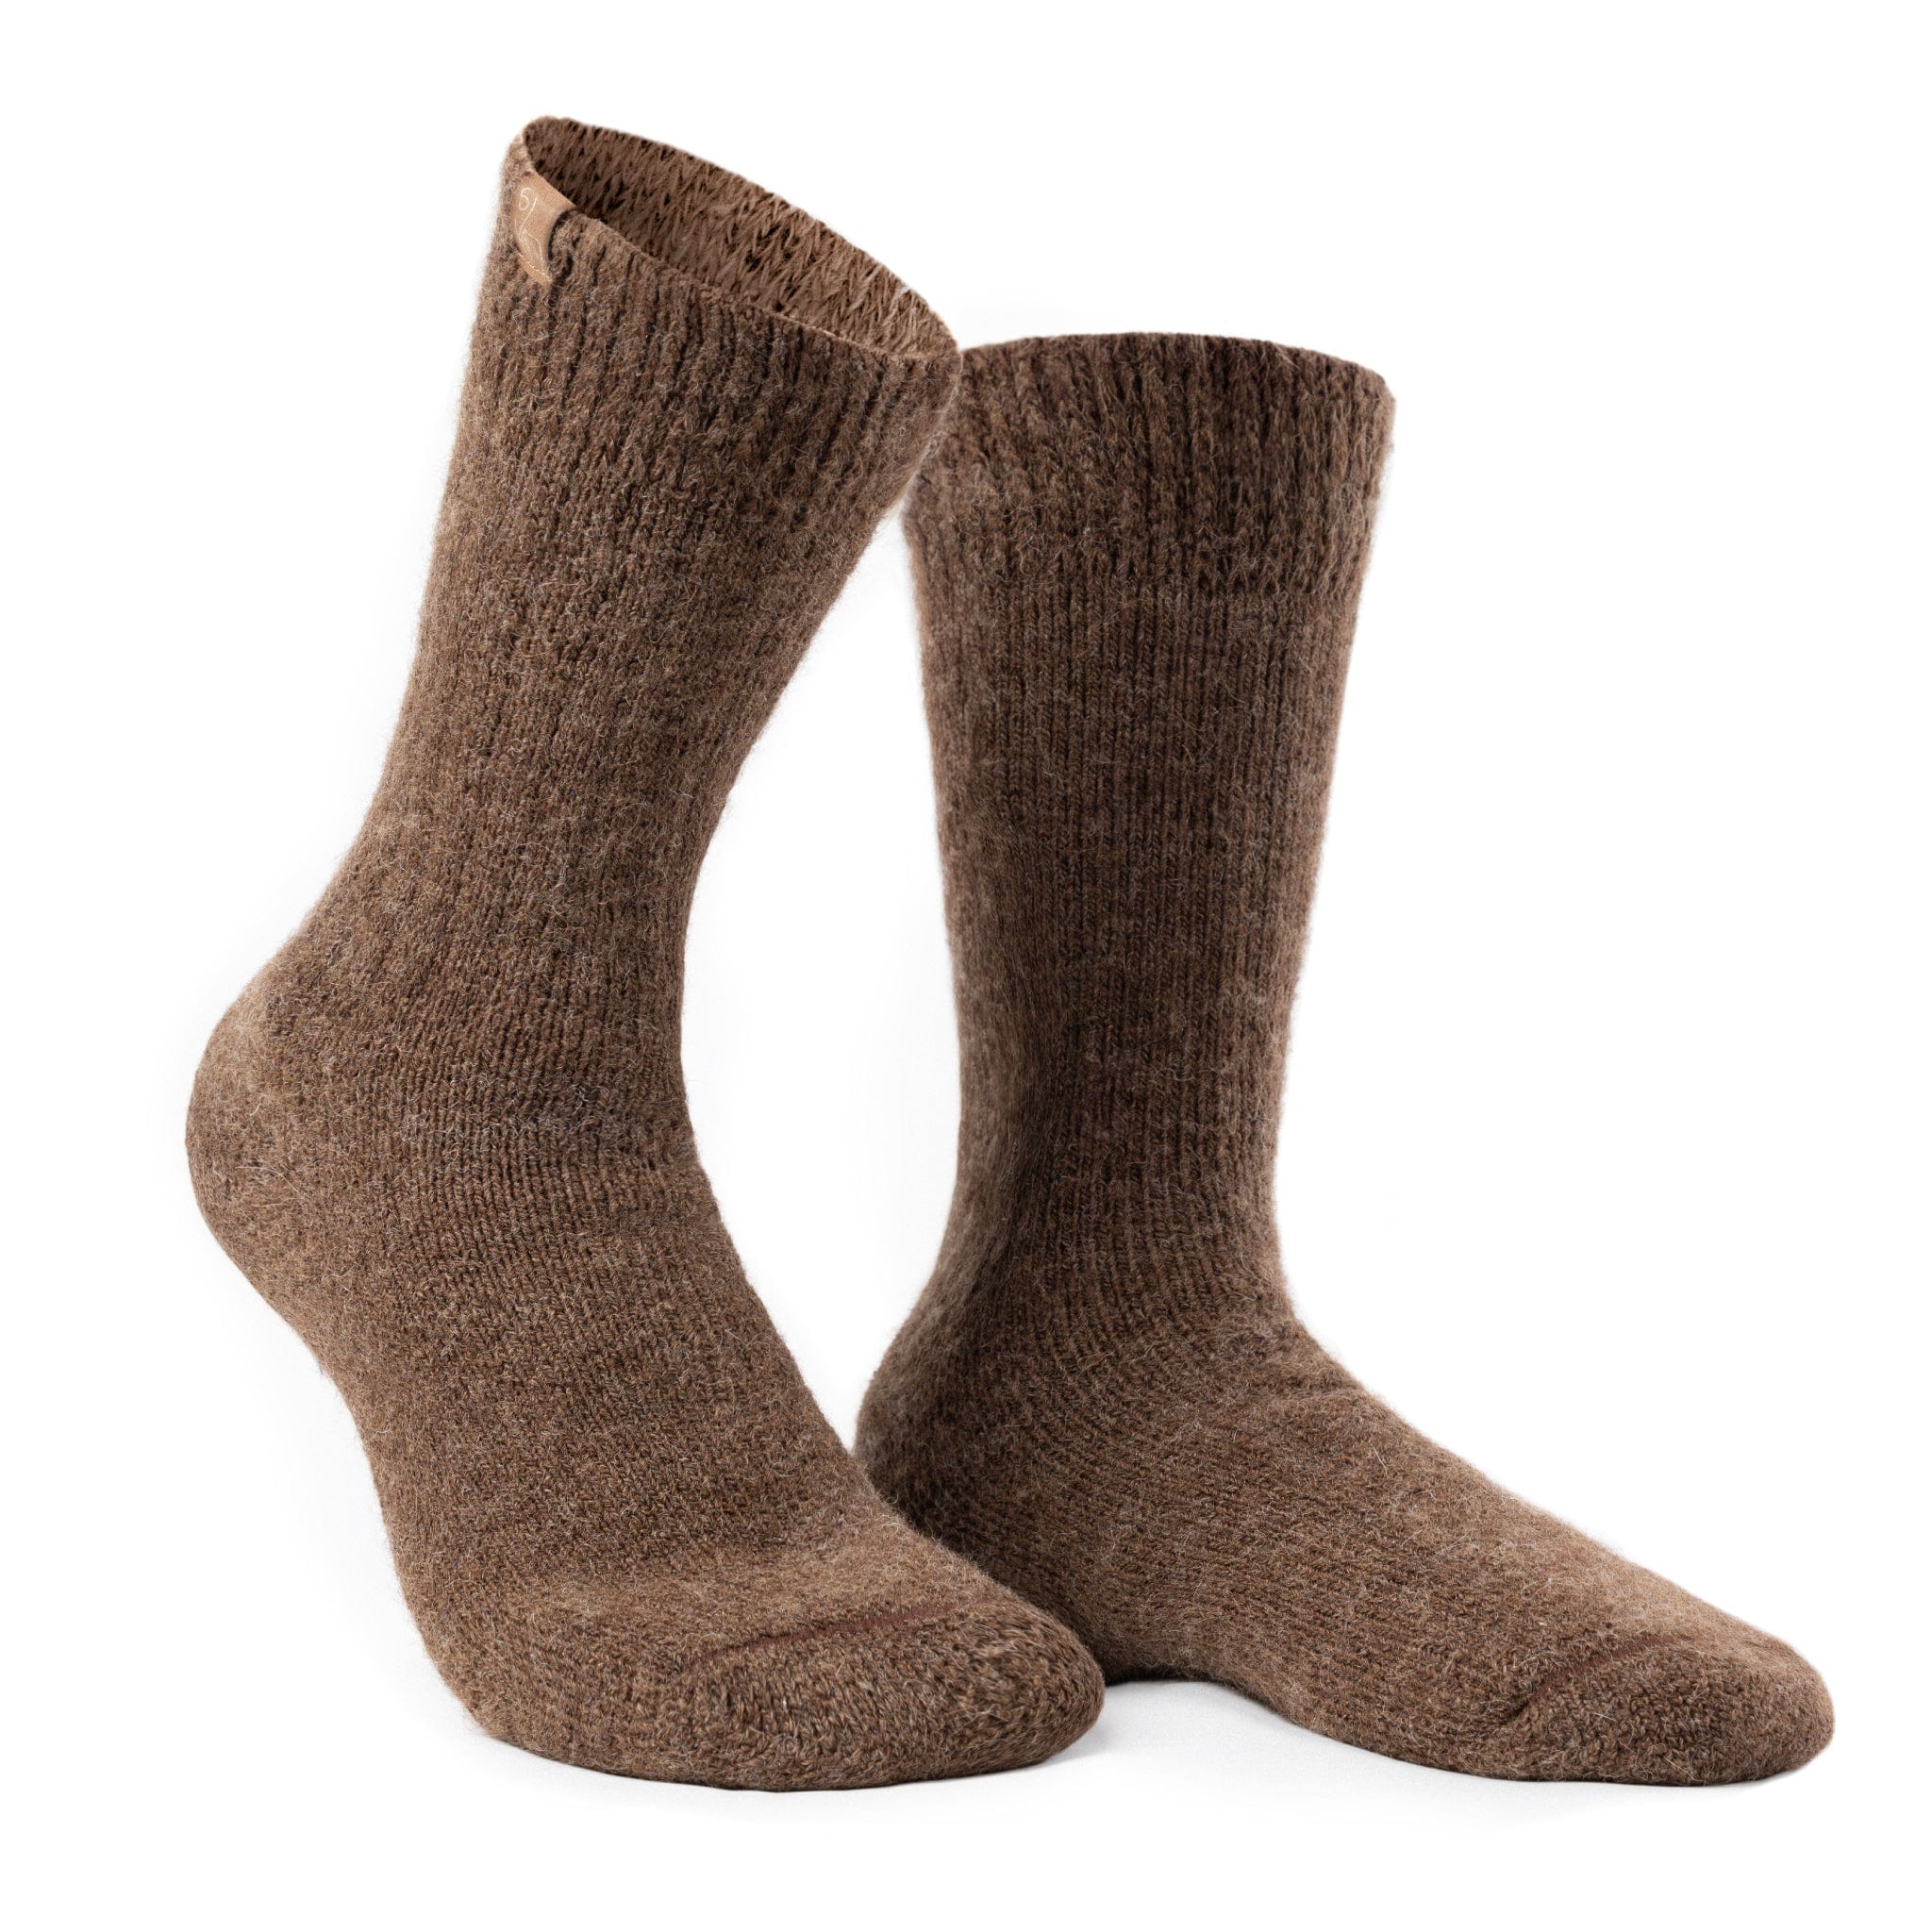 Buy Follkee Alpaca Wool Socks Women's and Men's Perfect for Spring Hiking,  Trekking Great Gift Idea Online in India 